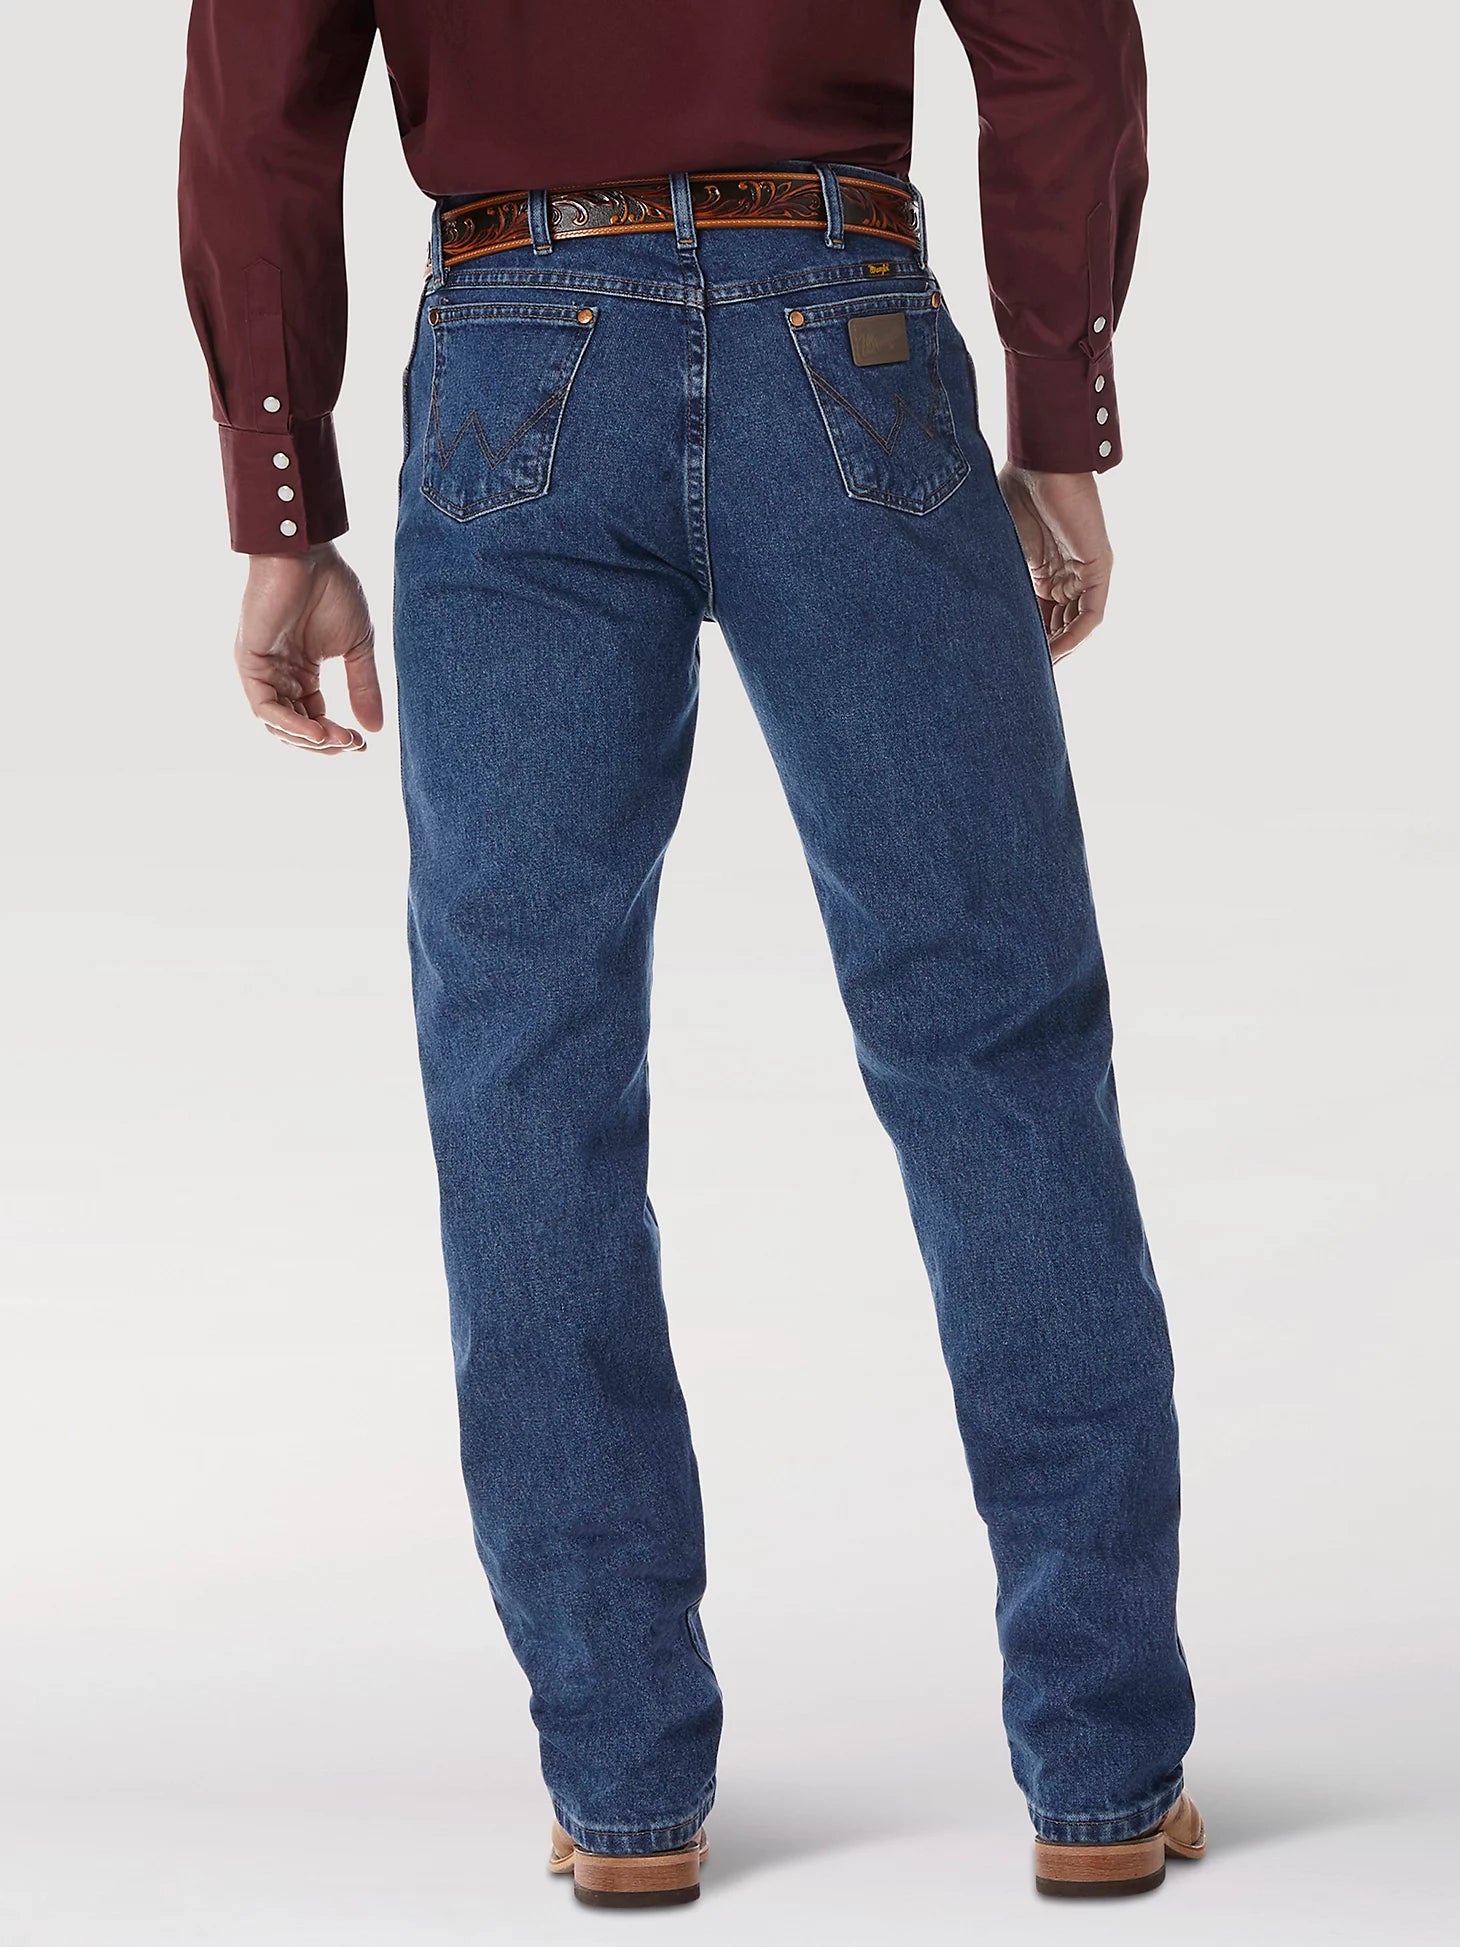 Jeans Wrangler Original Fit Stonewashed Caballero